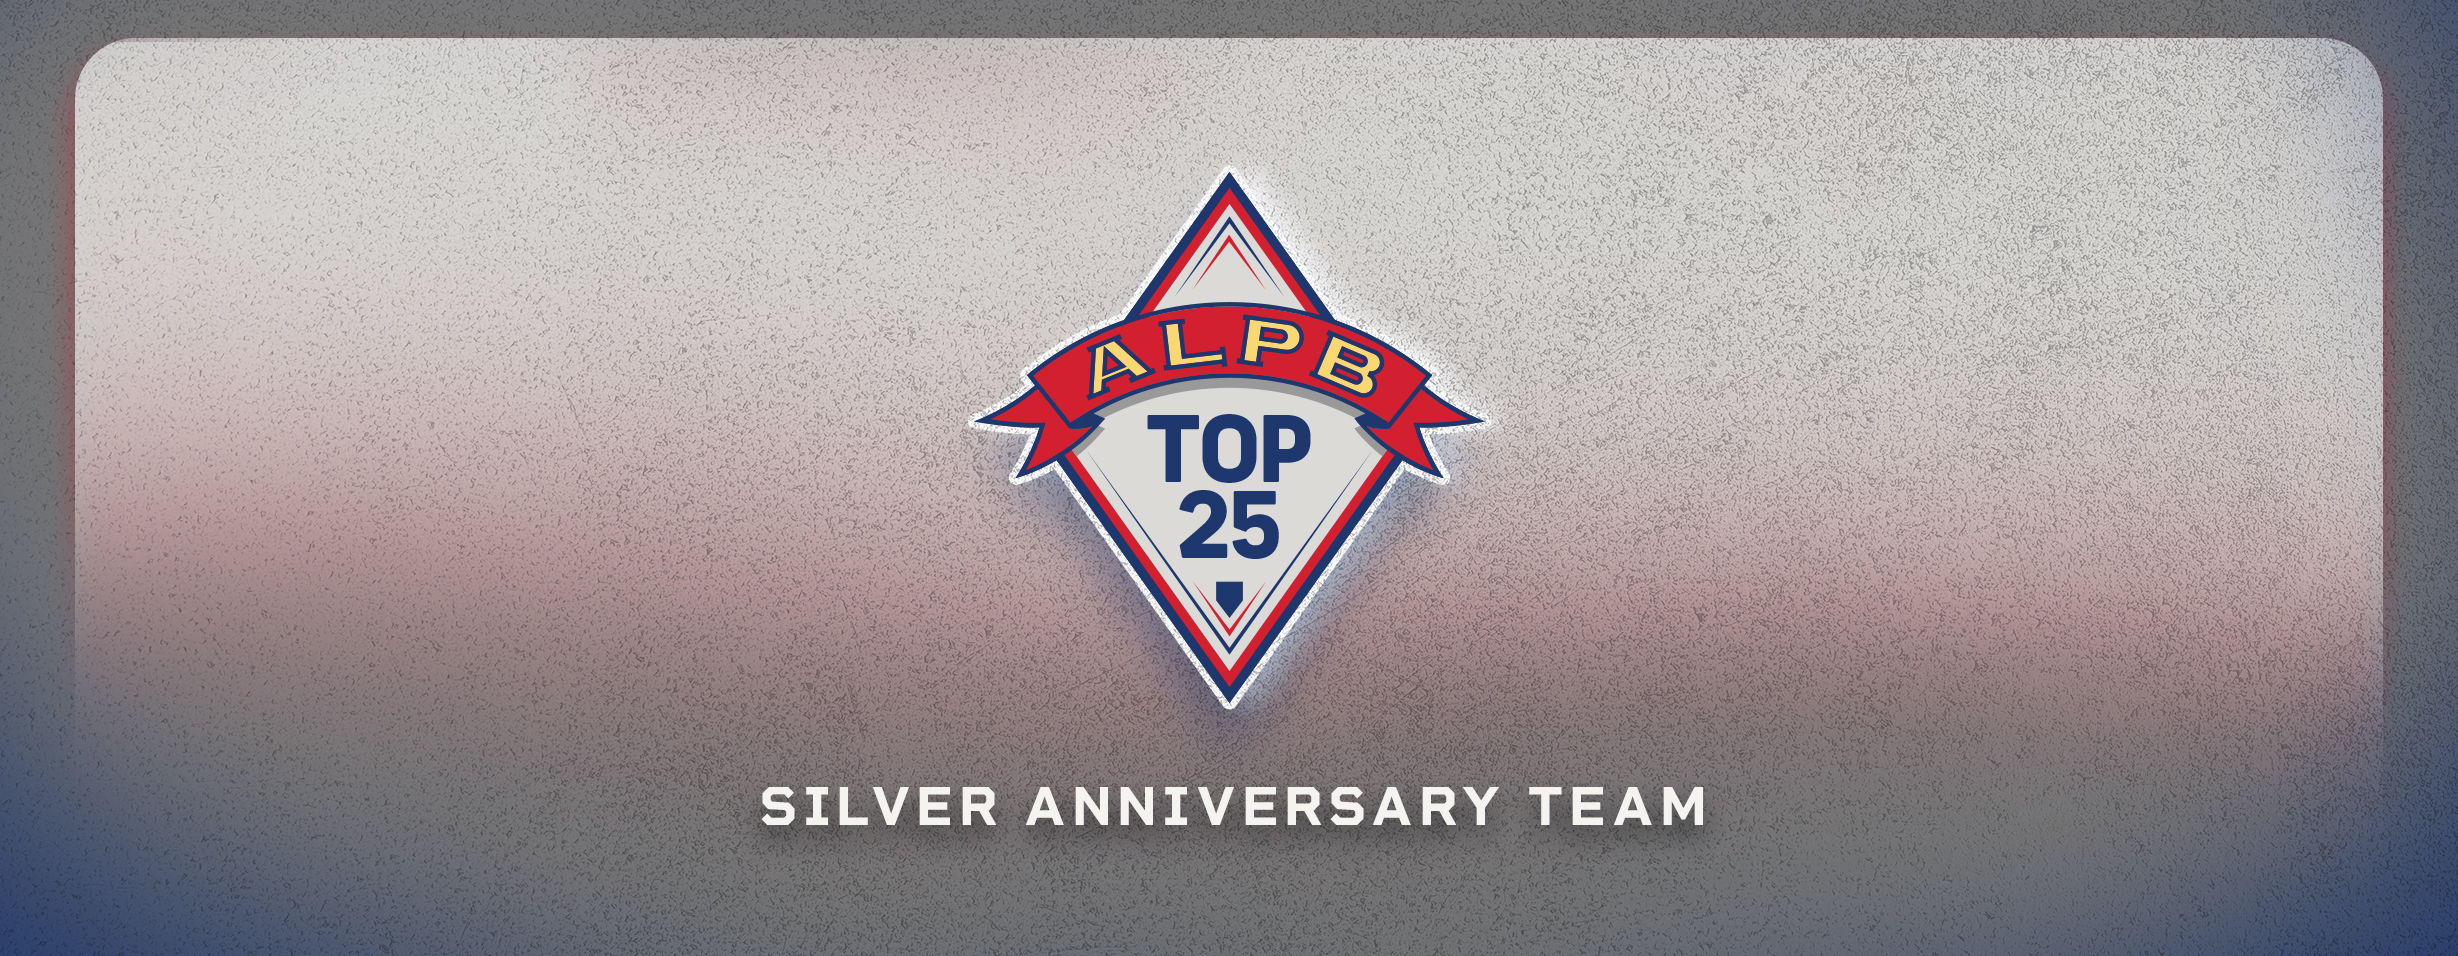 Atlantic League to introduce Silver Anniversary Team